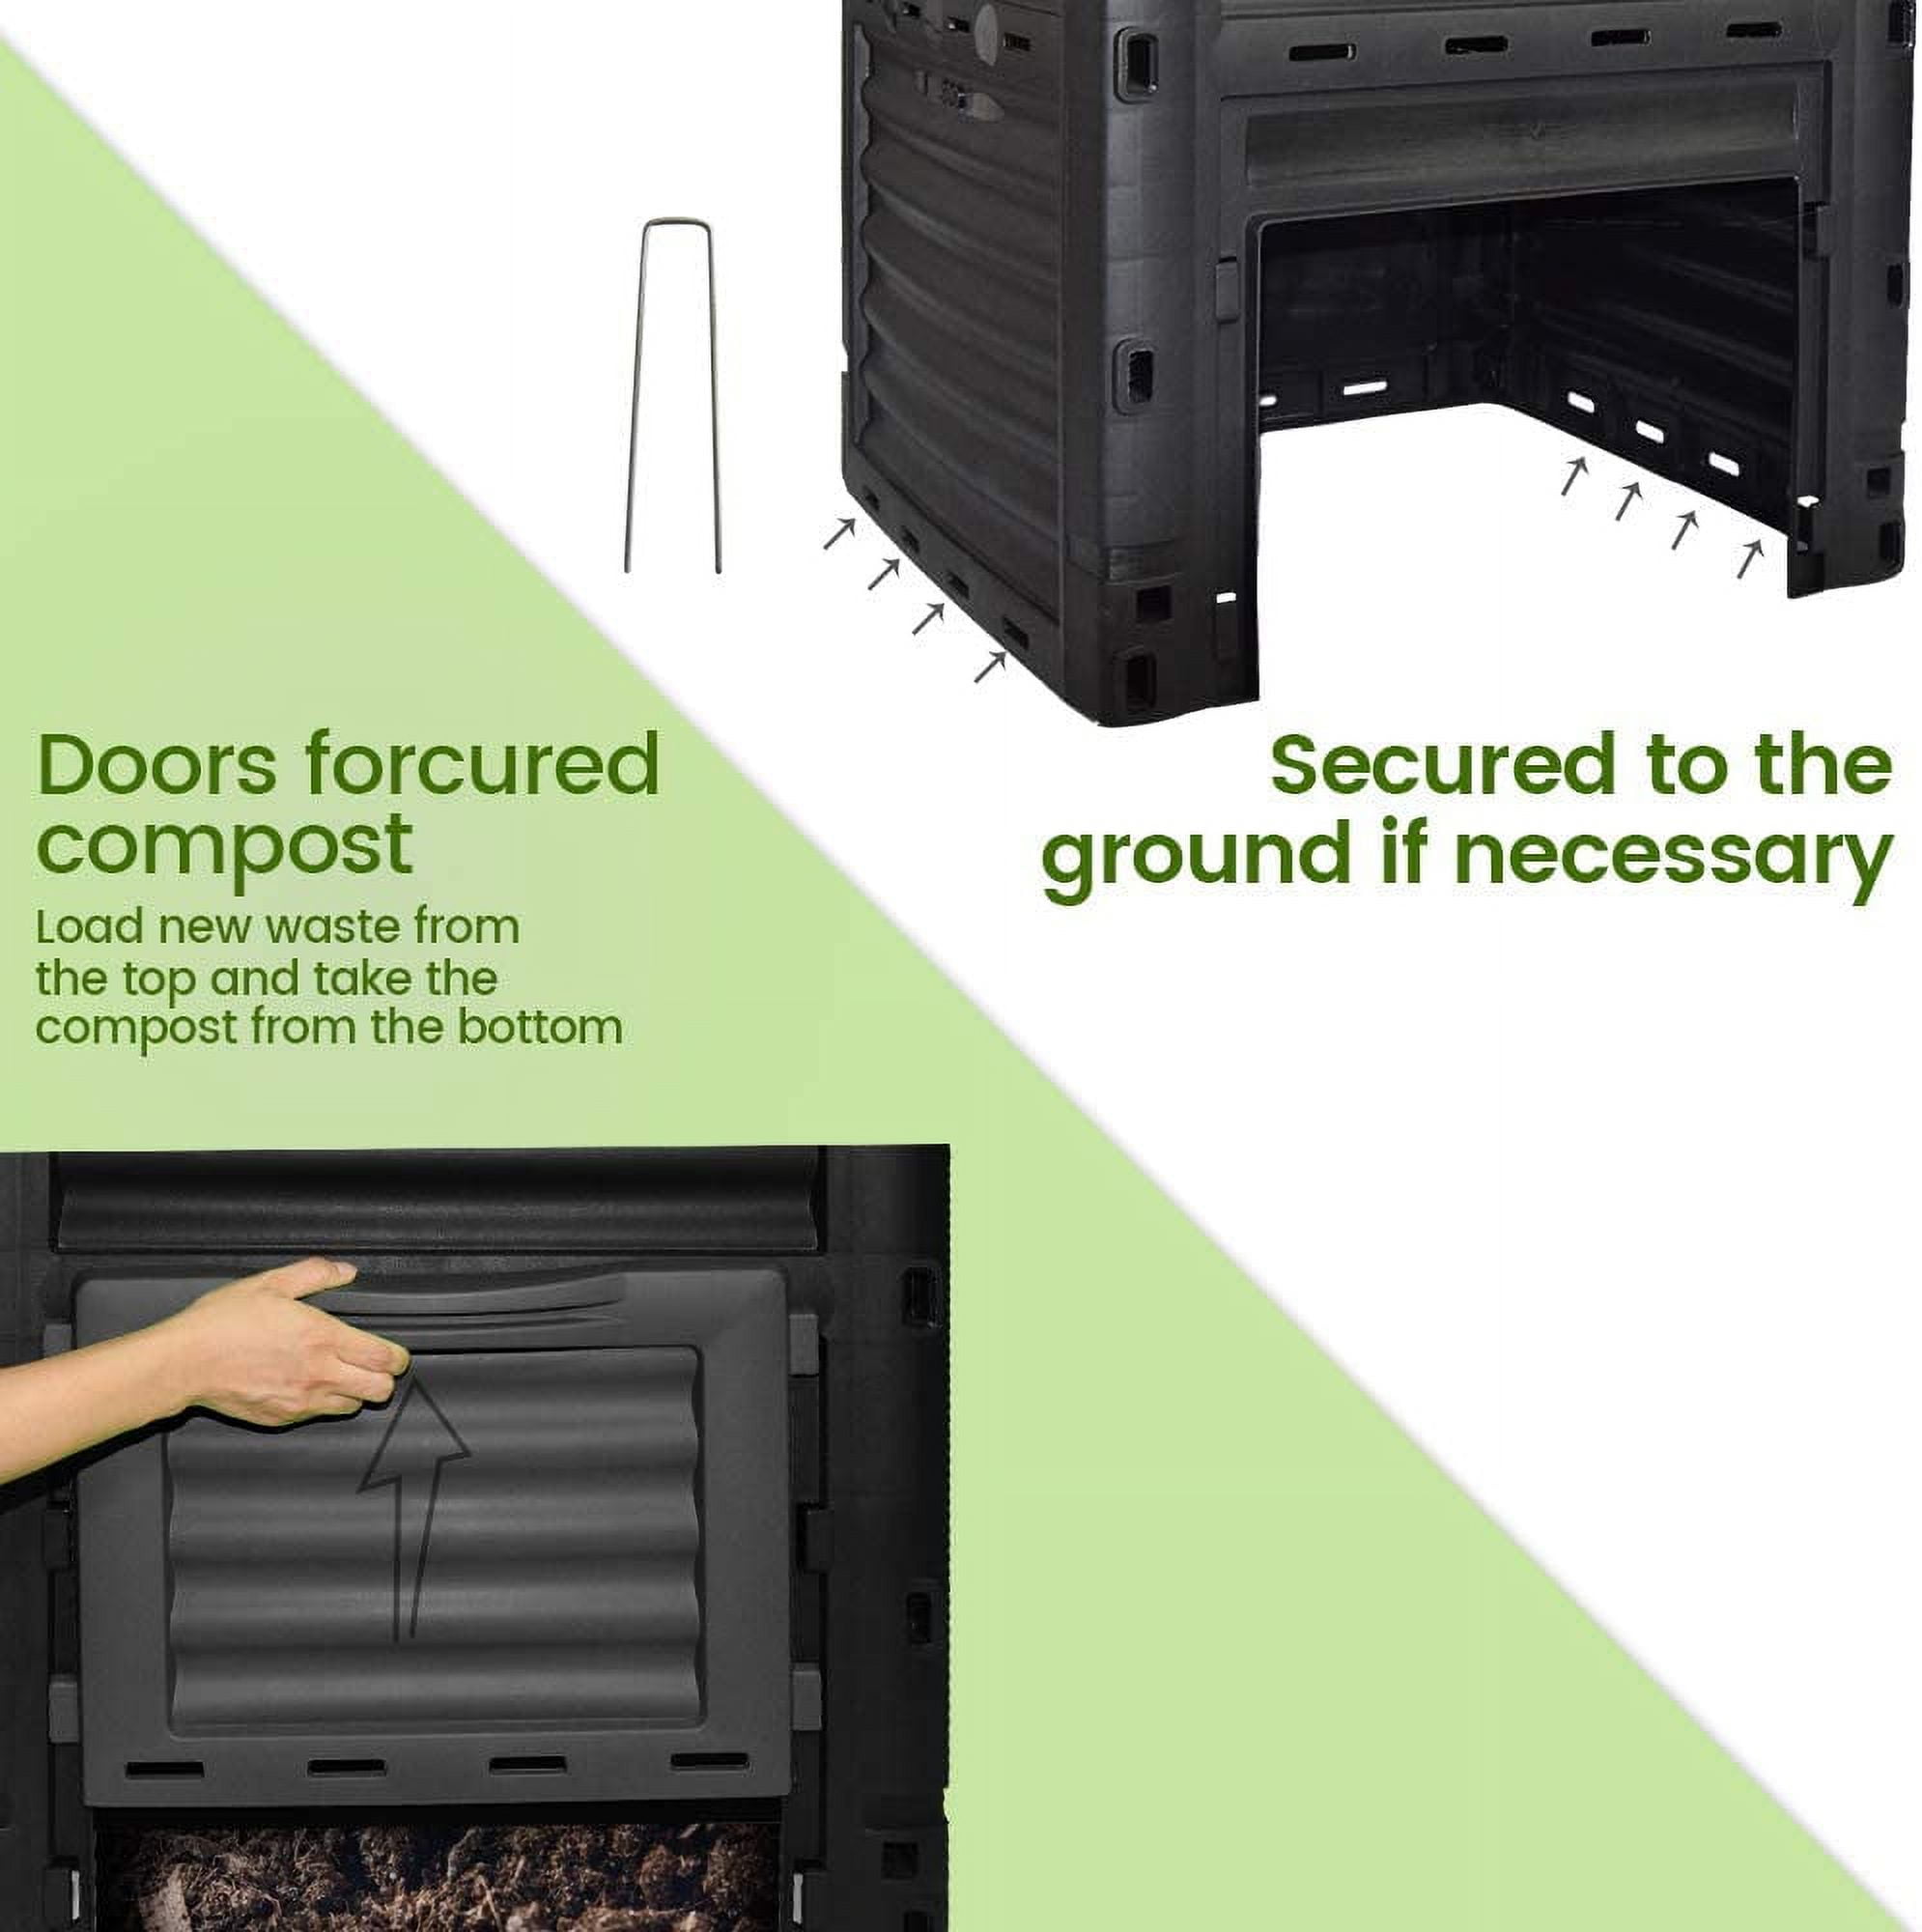 Ejwox Large Compost Bin Outdoor- 143/190 Gallon (540 /720 L) Garden Composter-BPA Free, Black